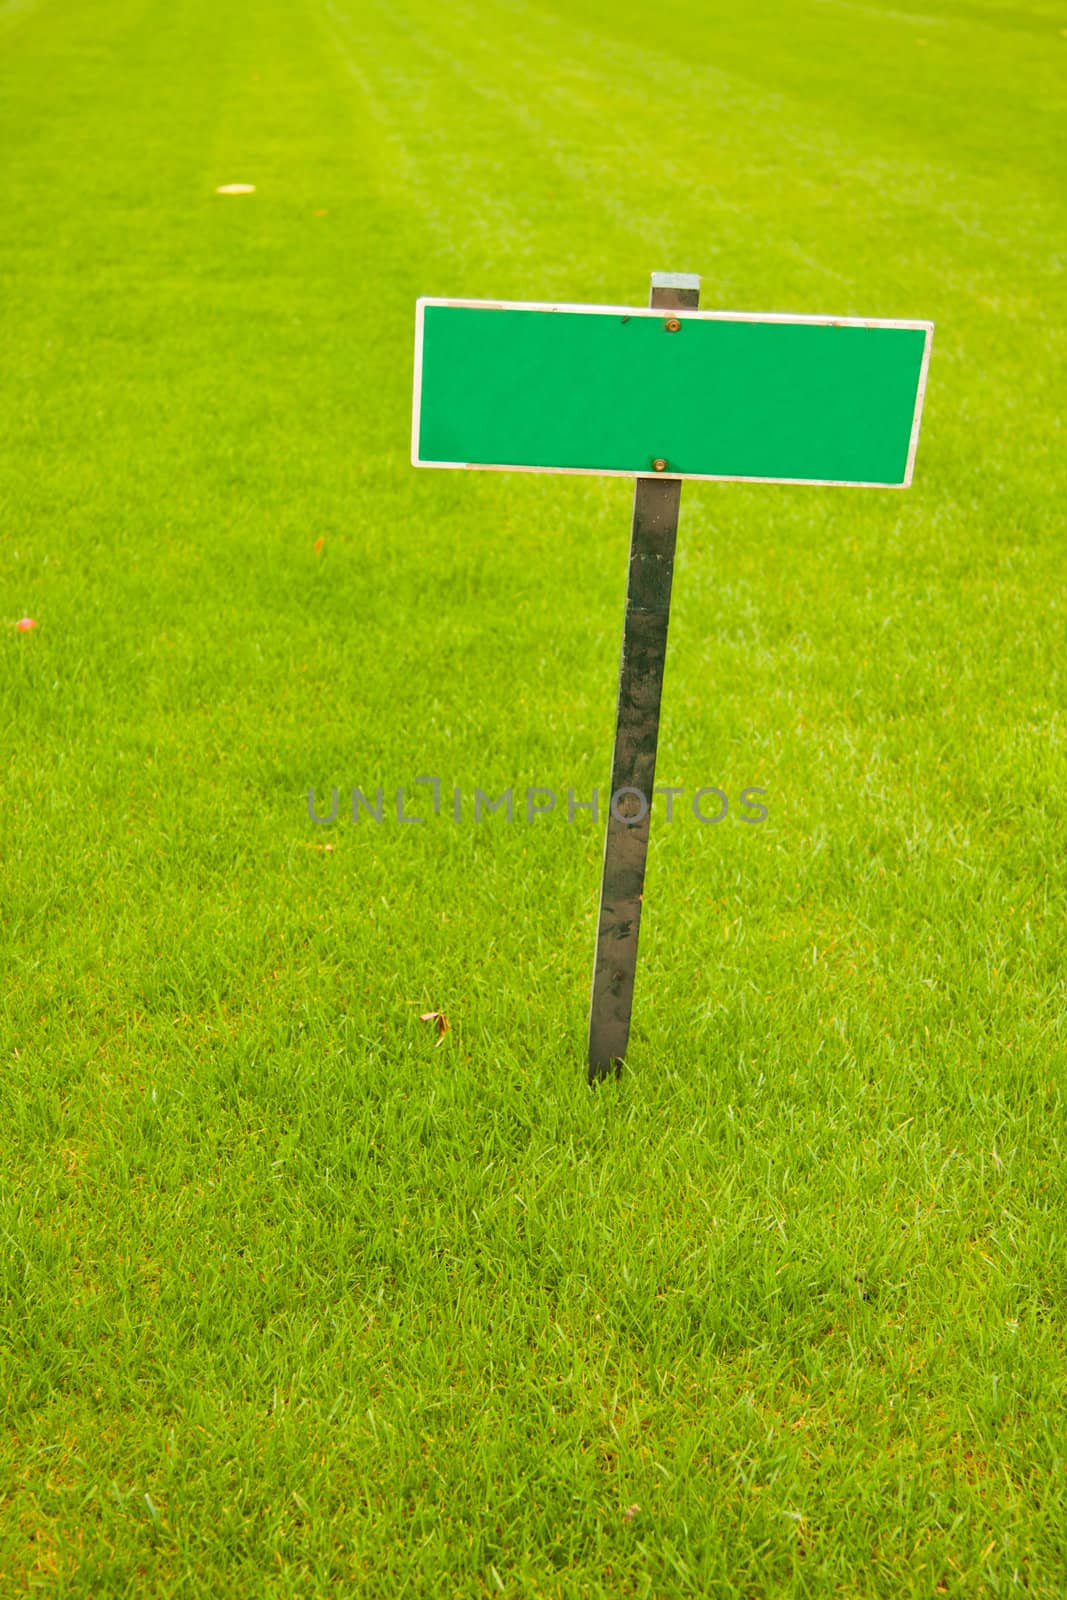 Green grass with a sign, vertical shot by Lamarinx